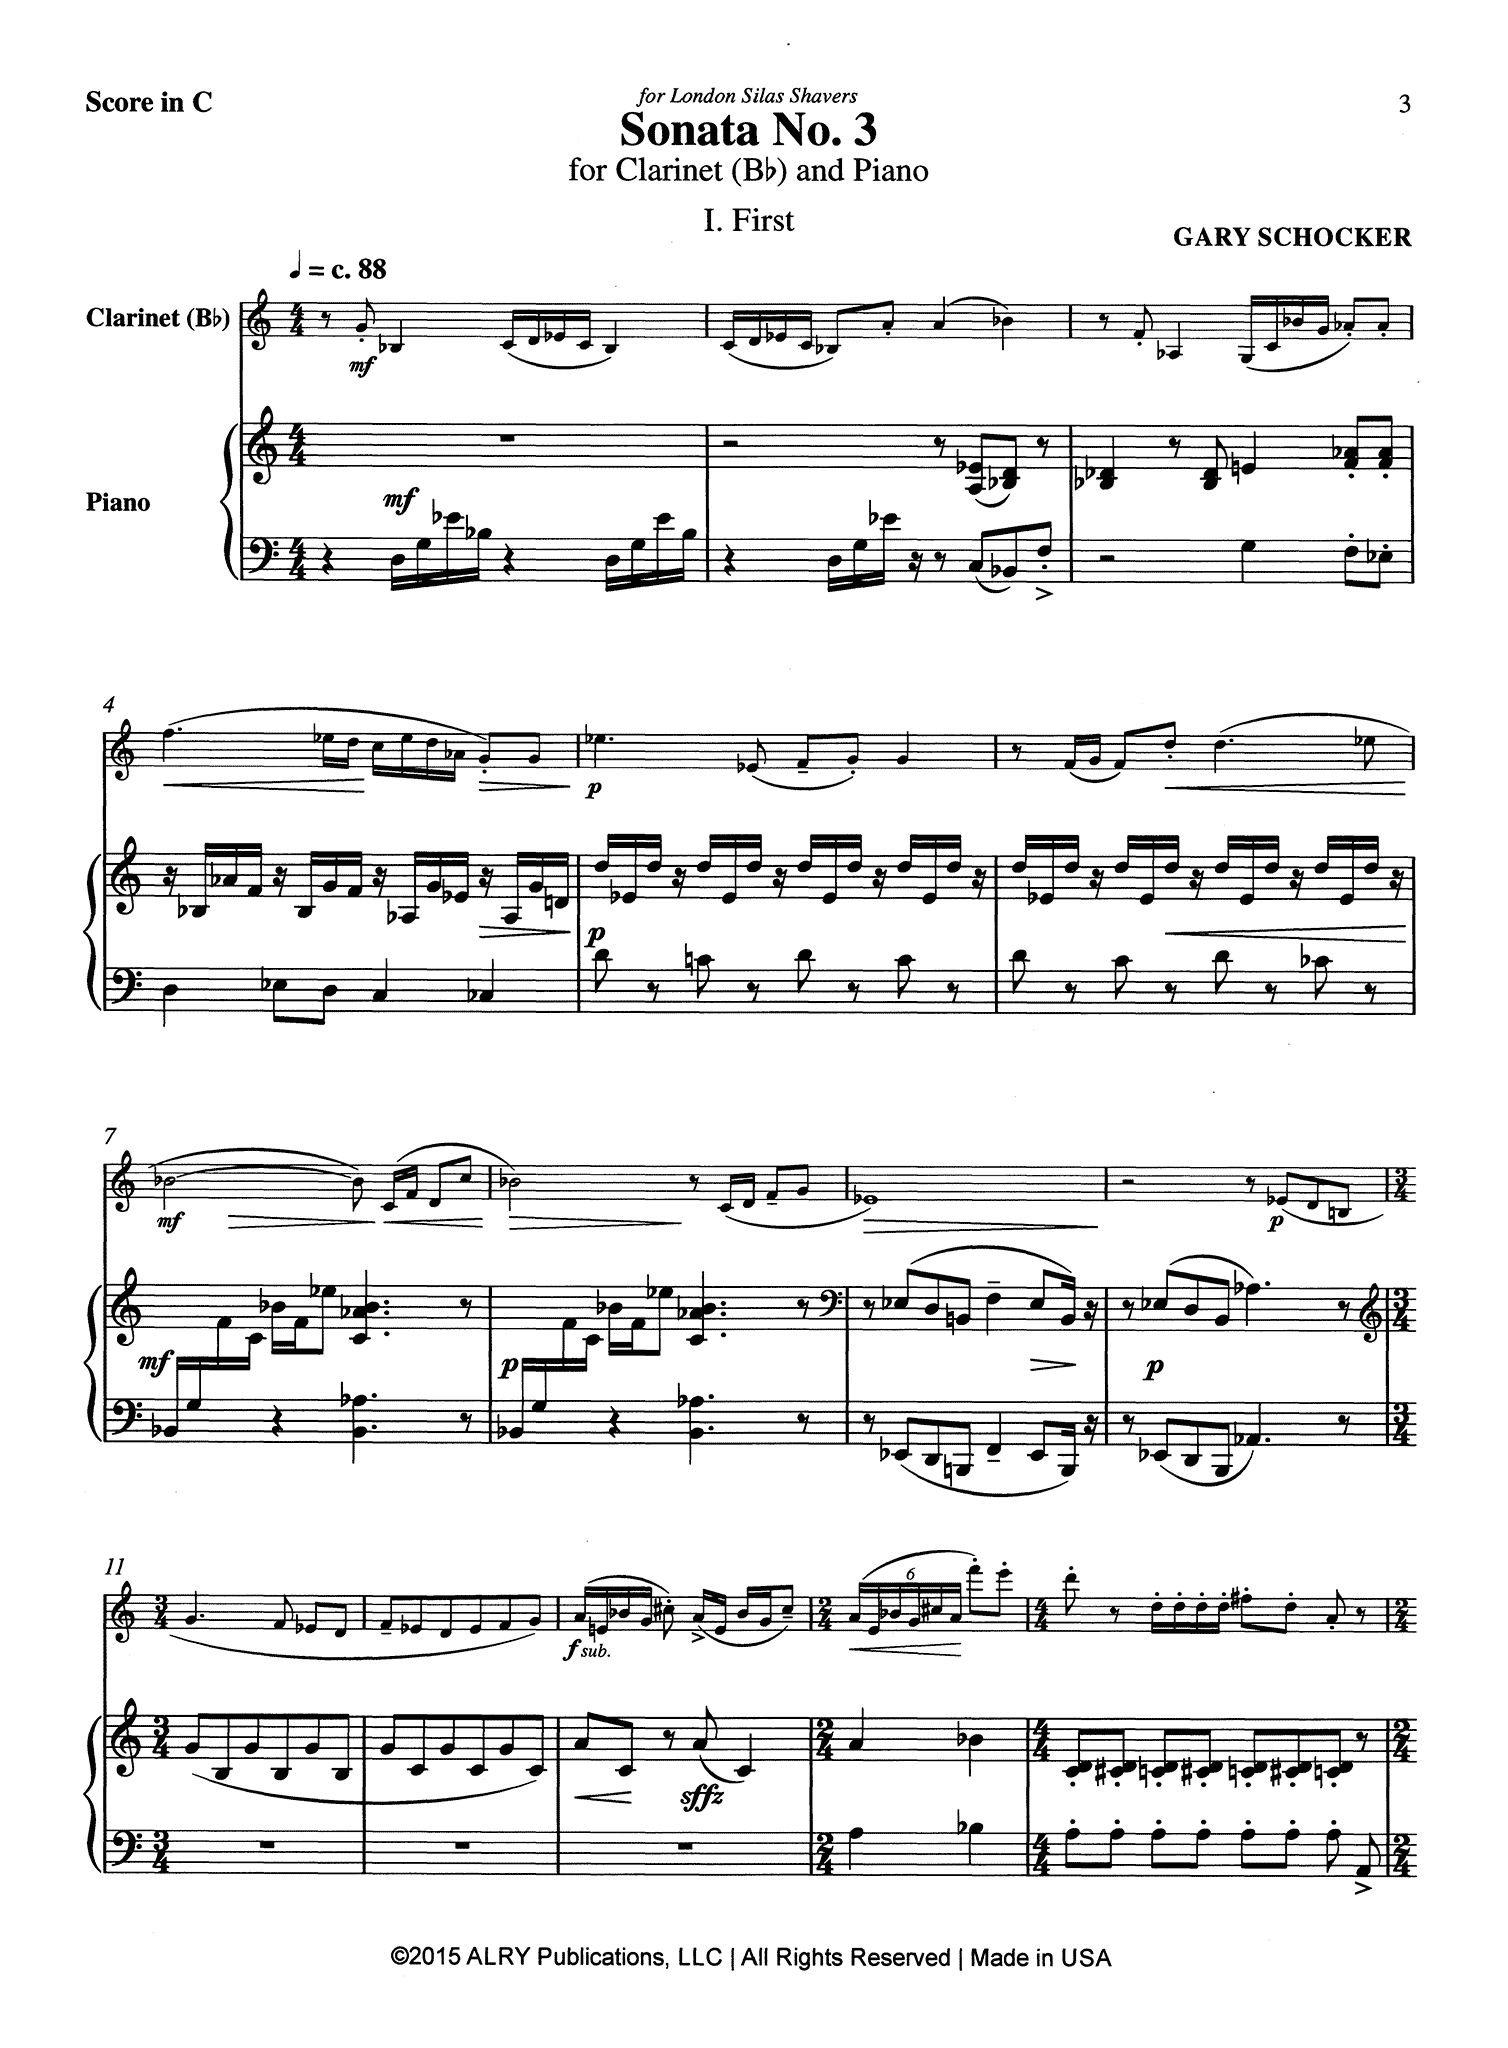 Schocker Clarinet Sonata No. 3 - Movement 1